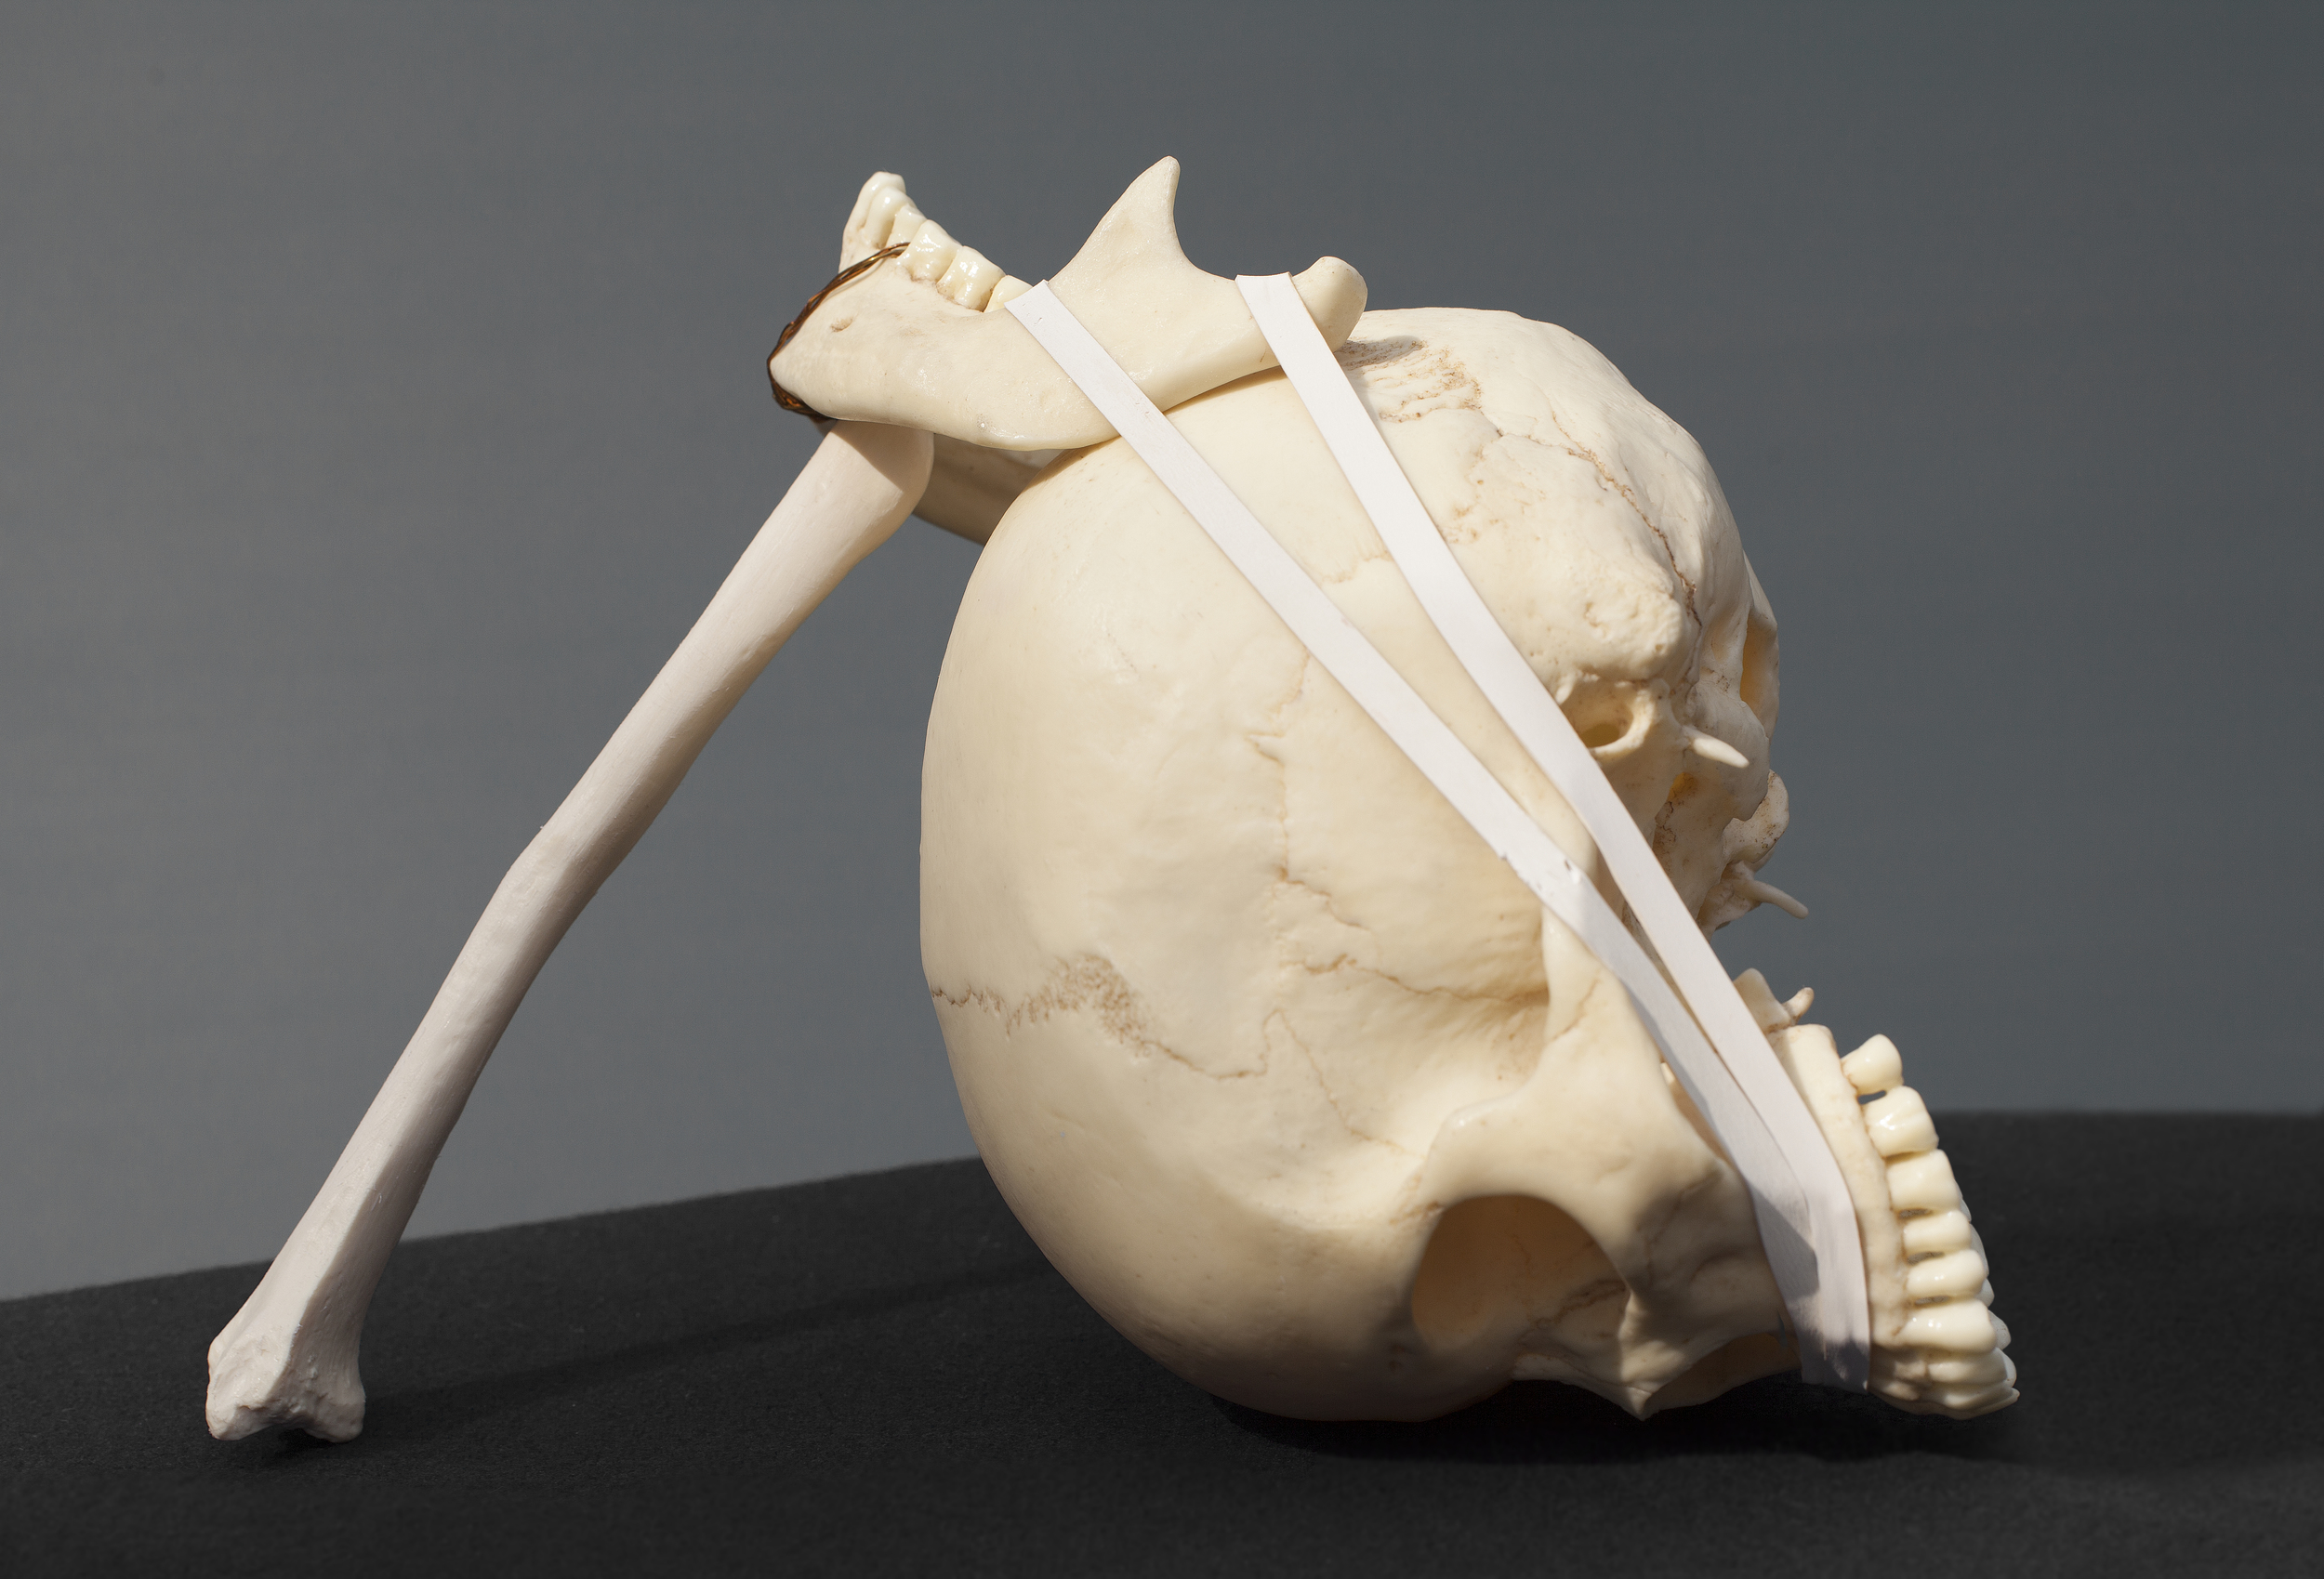 DAVID'S SLING (Magic Wand),  2014, plastic skull, bone and rubber bands